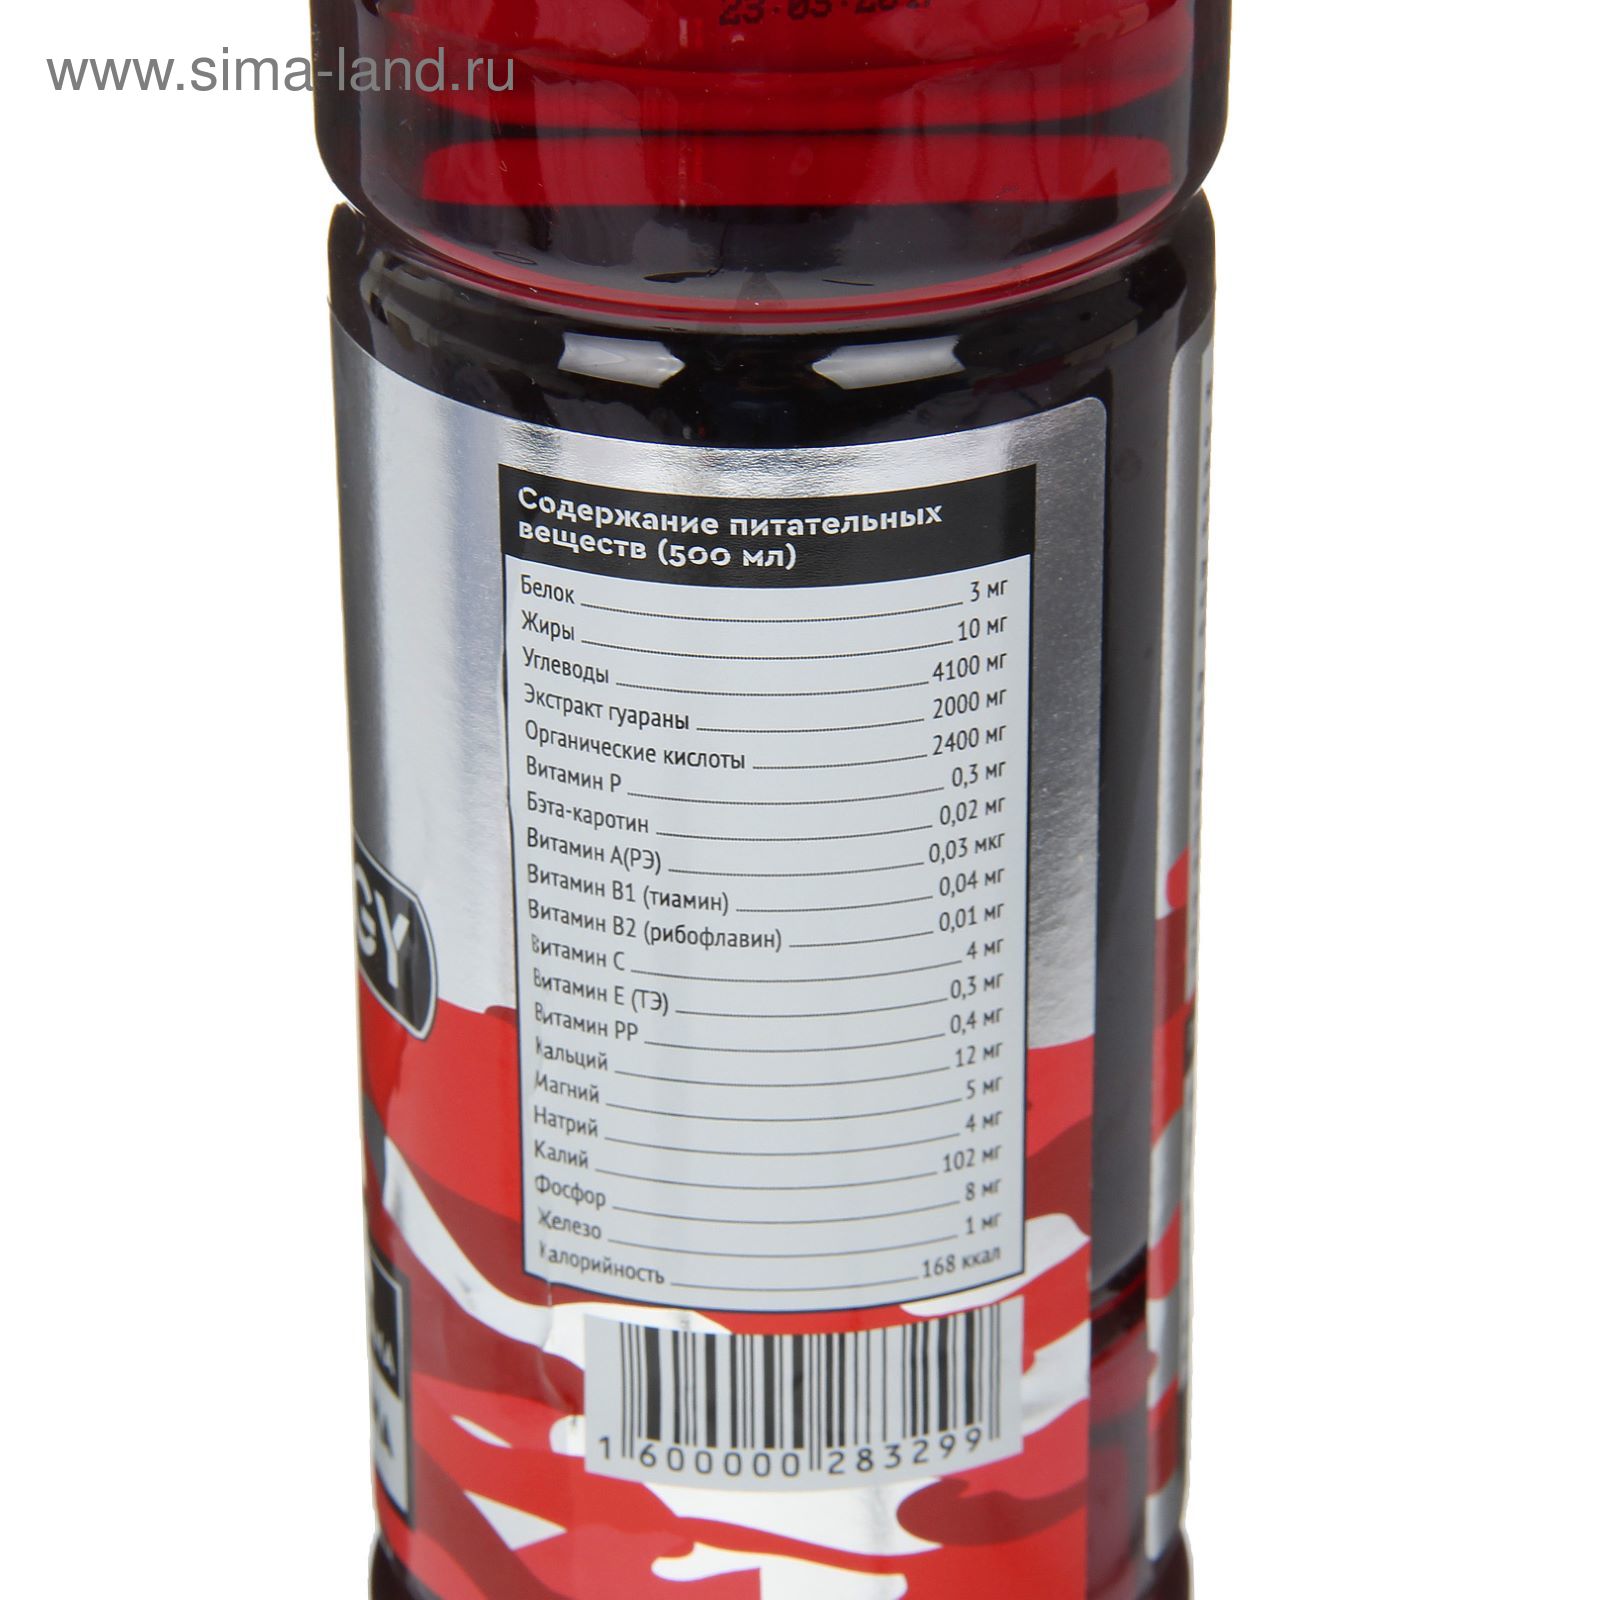 Напиток SportLine Red Energy 2000mg 500ml (Вишня)